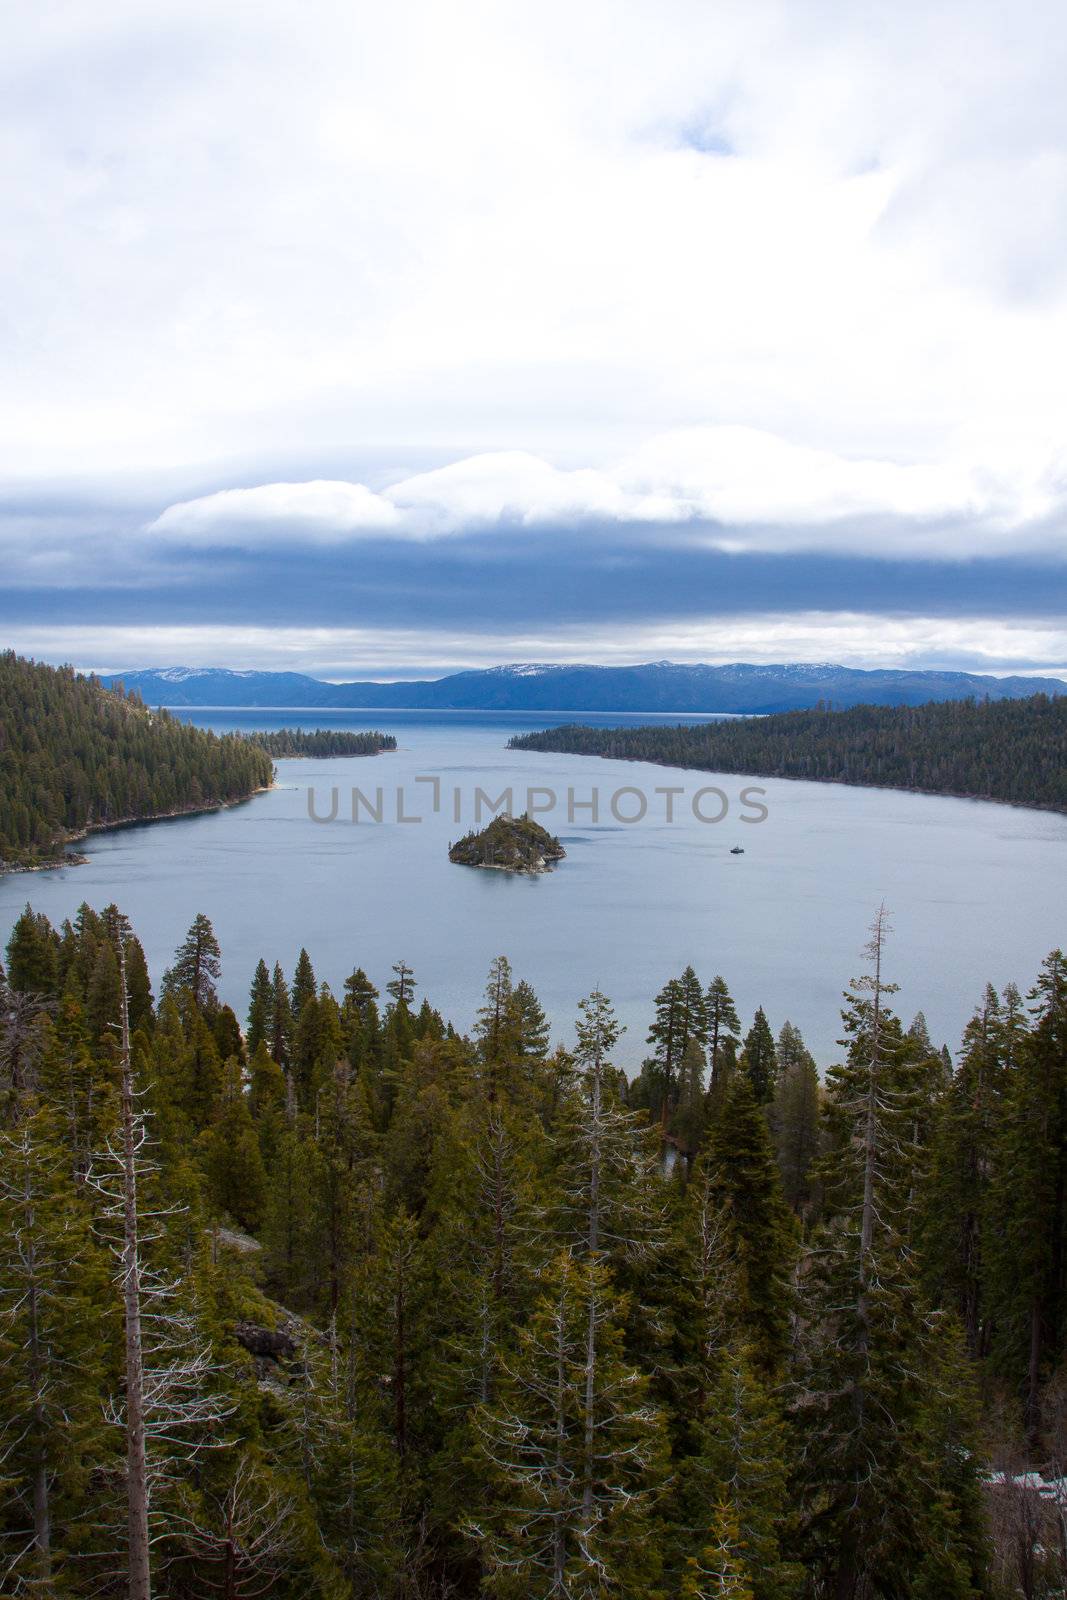 Lake Tahoe Vacation by joshuaraineyphotography